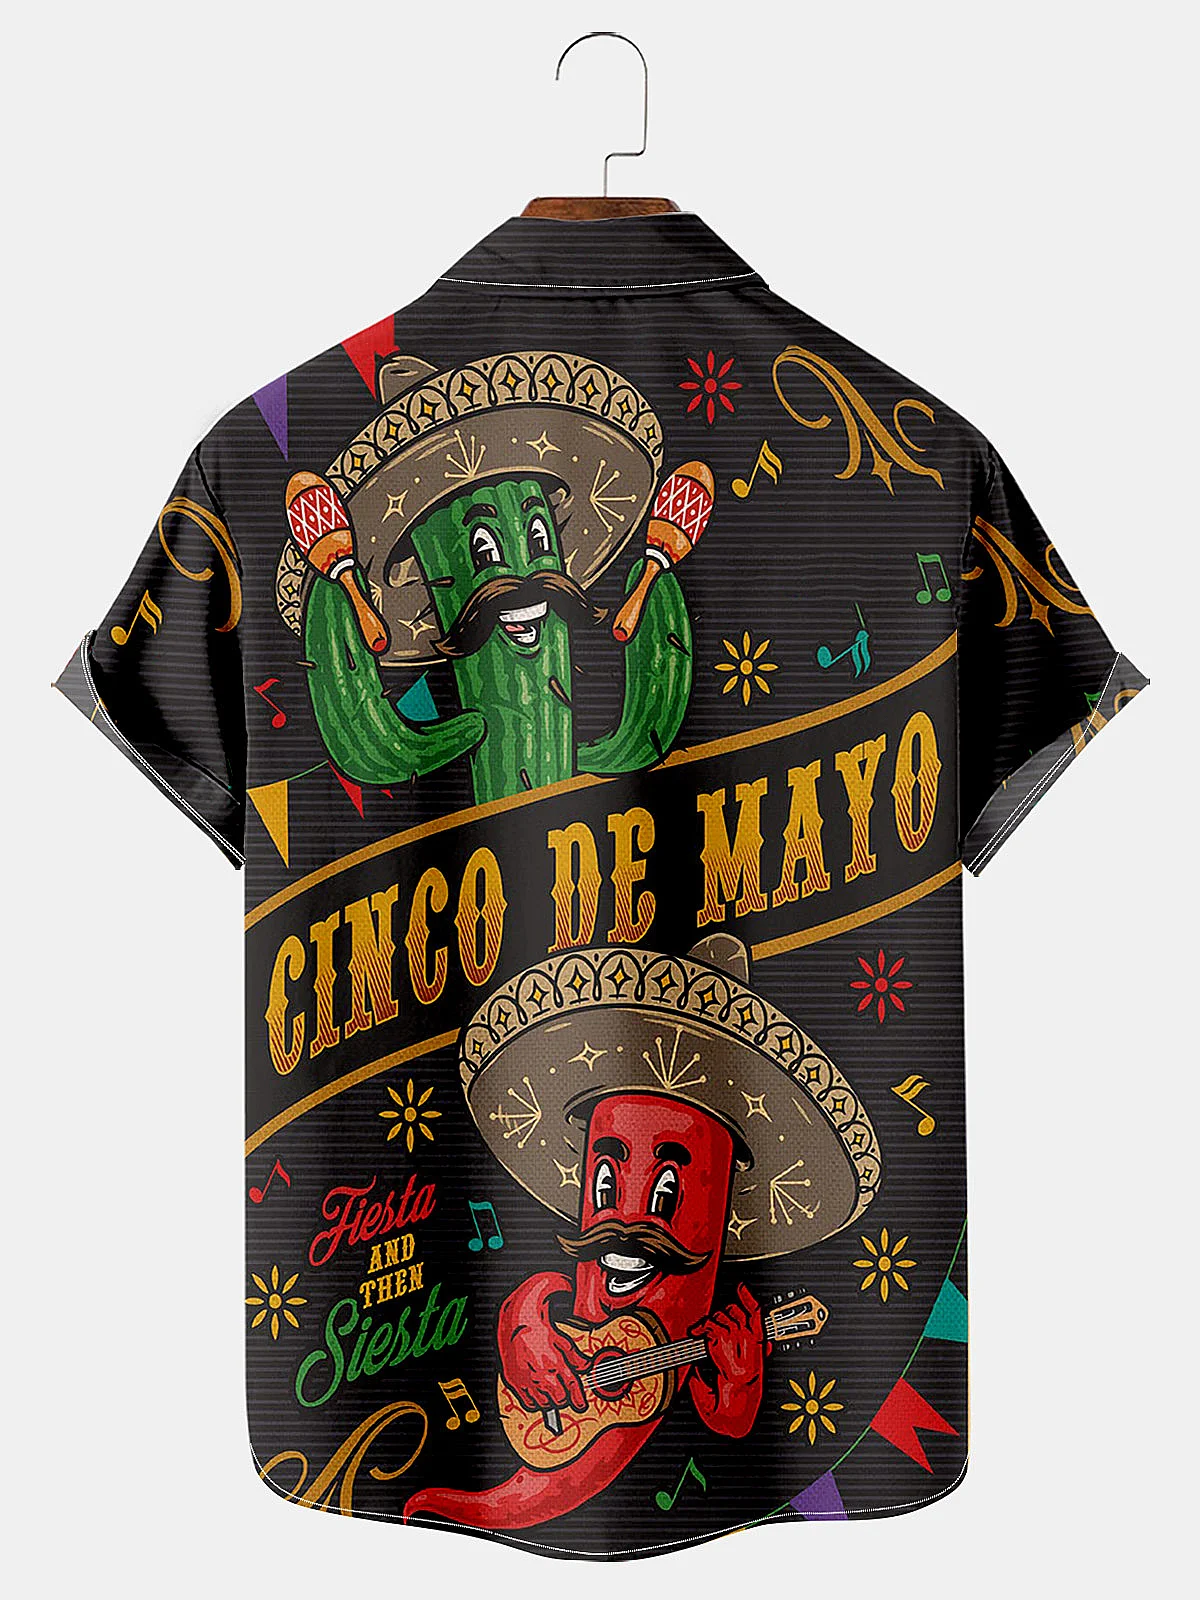 Royaura  Cinco de Mayo Cactus pepper straw hat men's lapel button pocket shirt